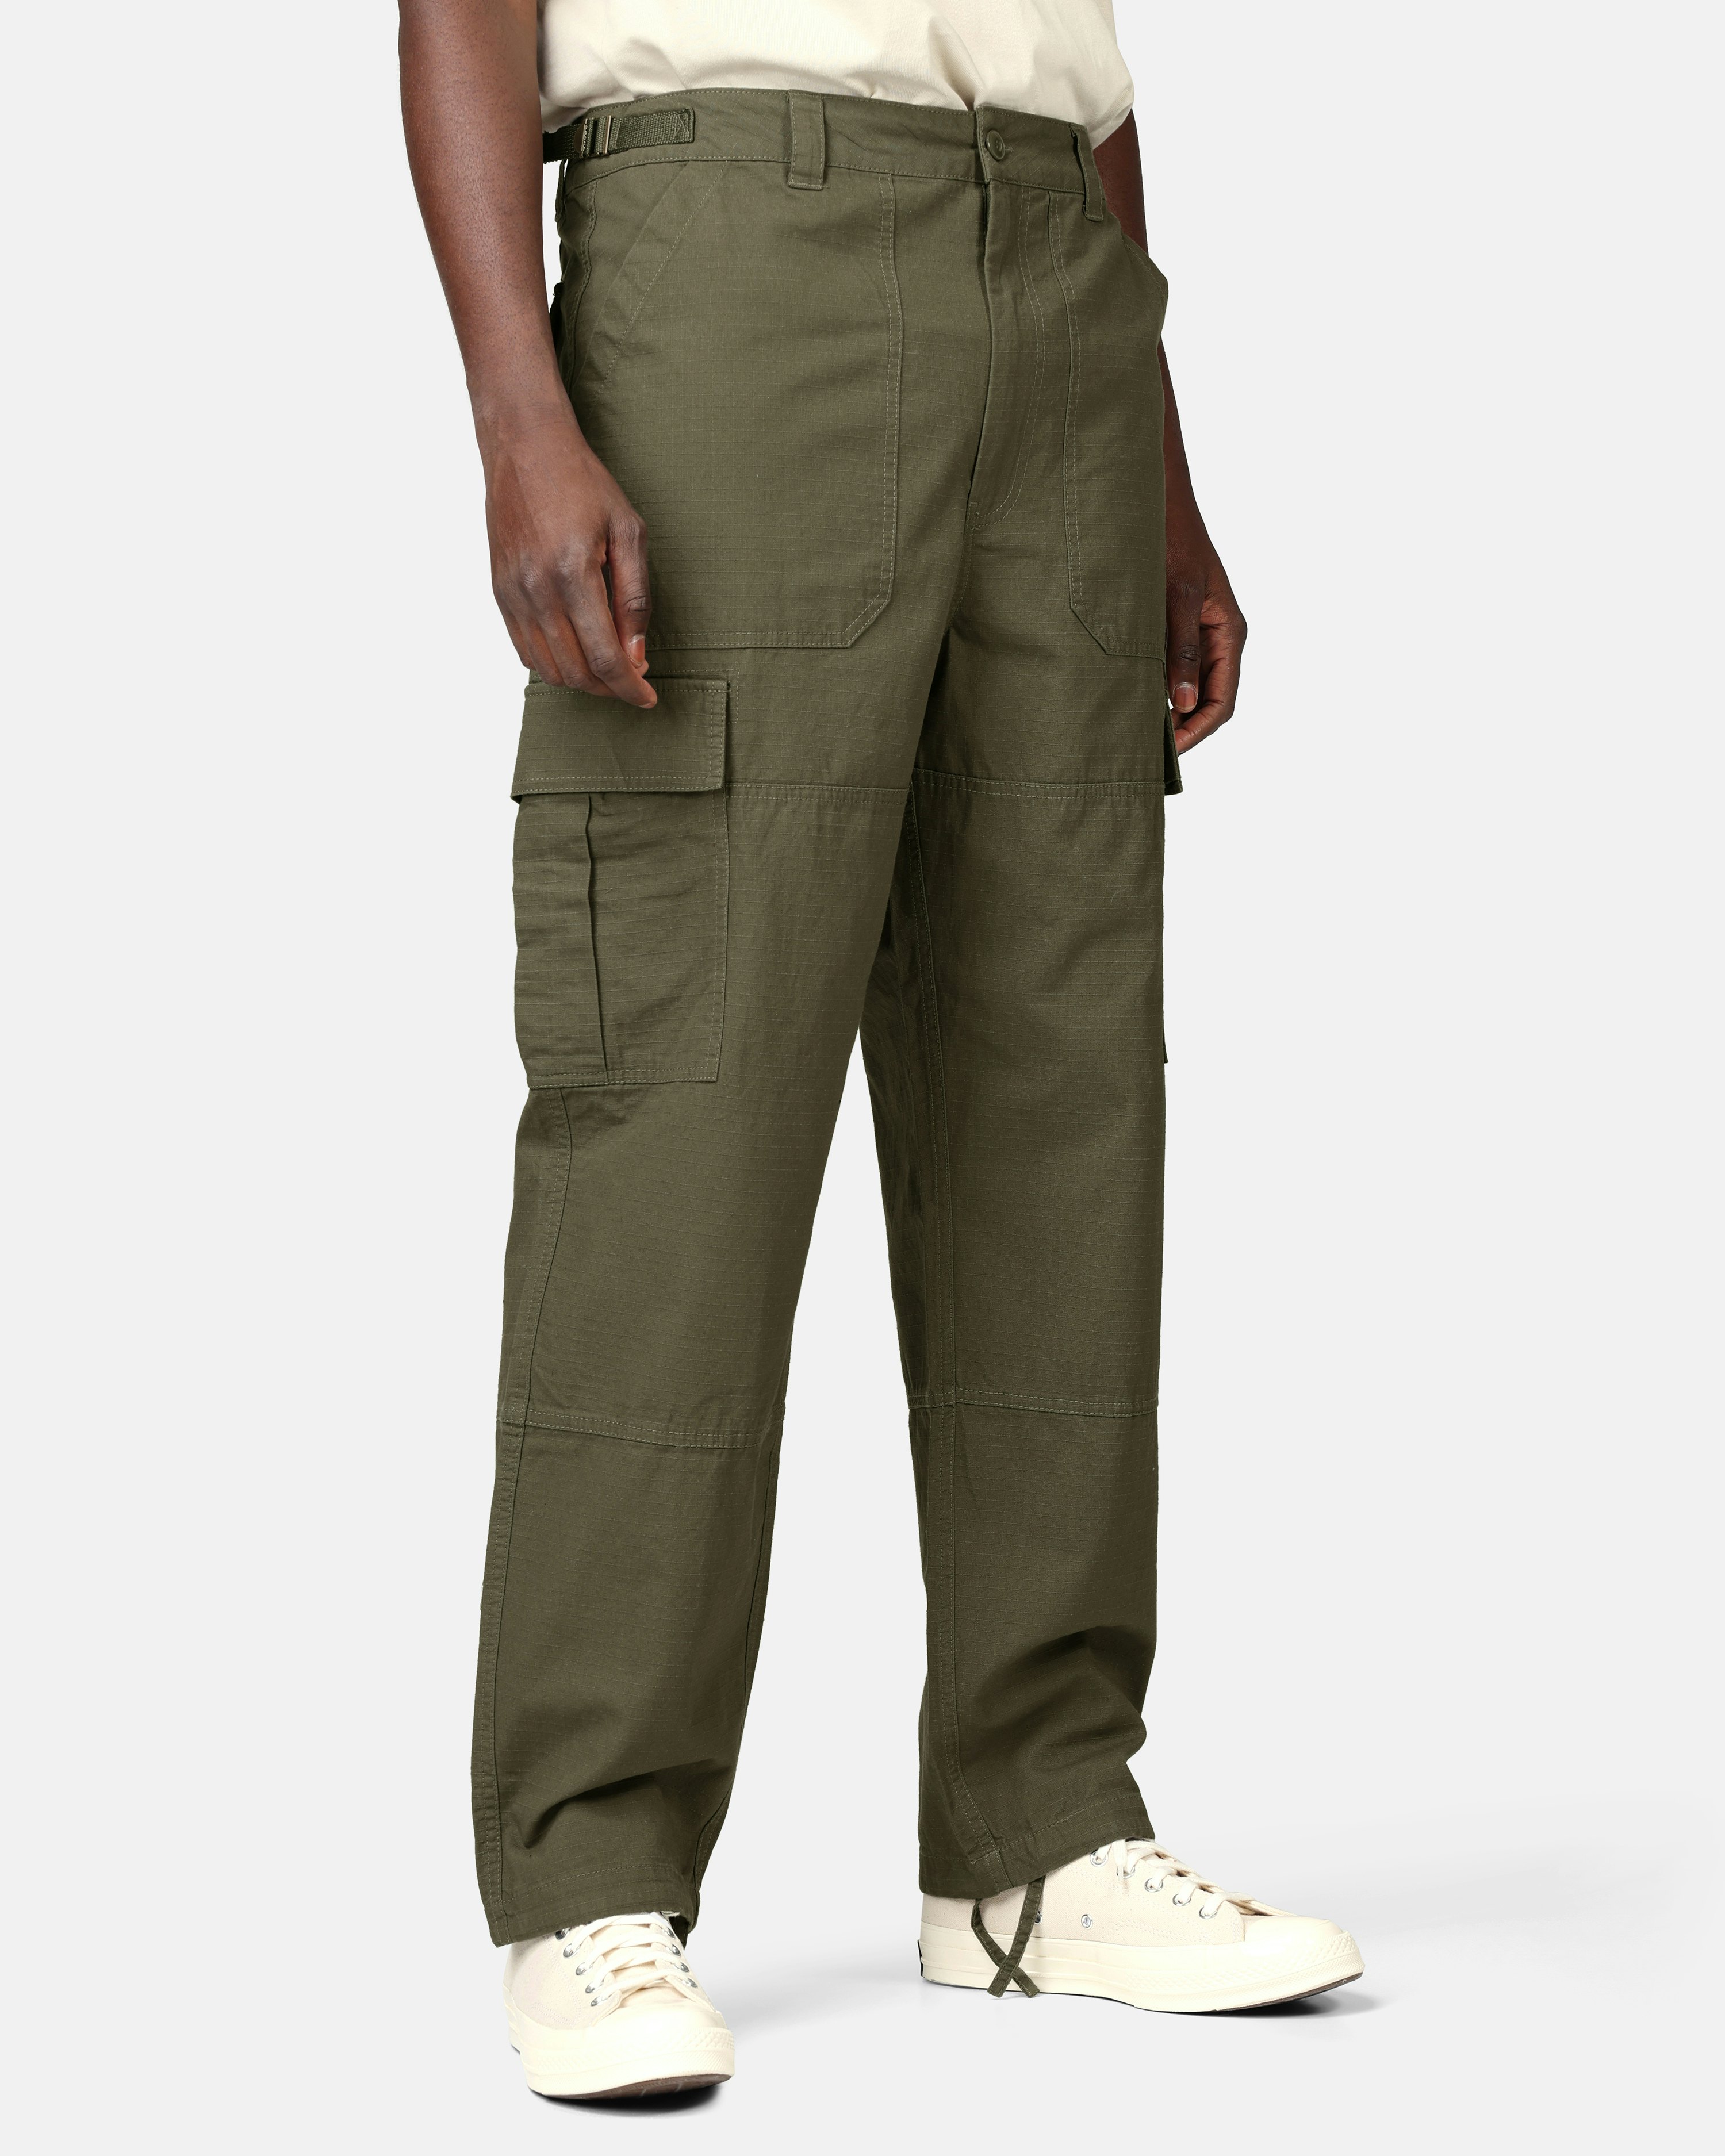 YOKE 23SS Military Cargo Pants size3studious